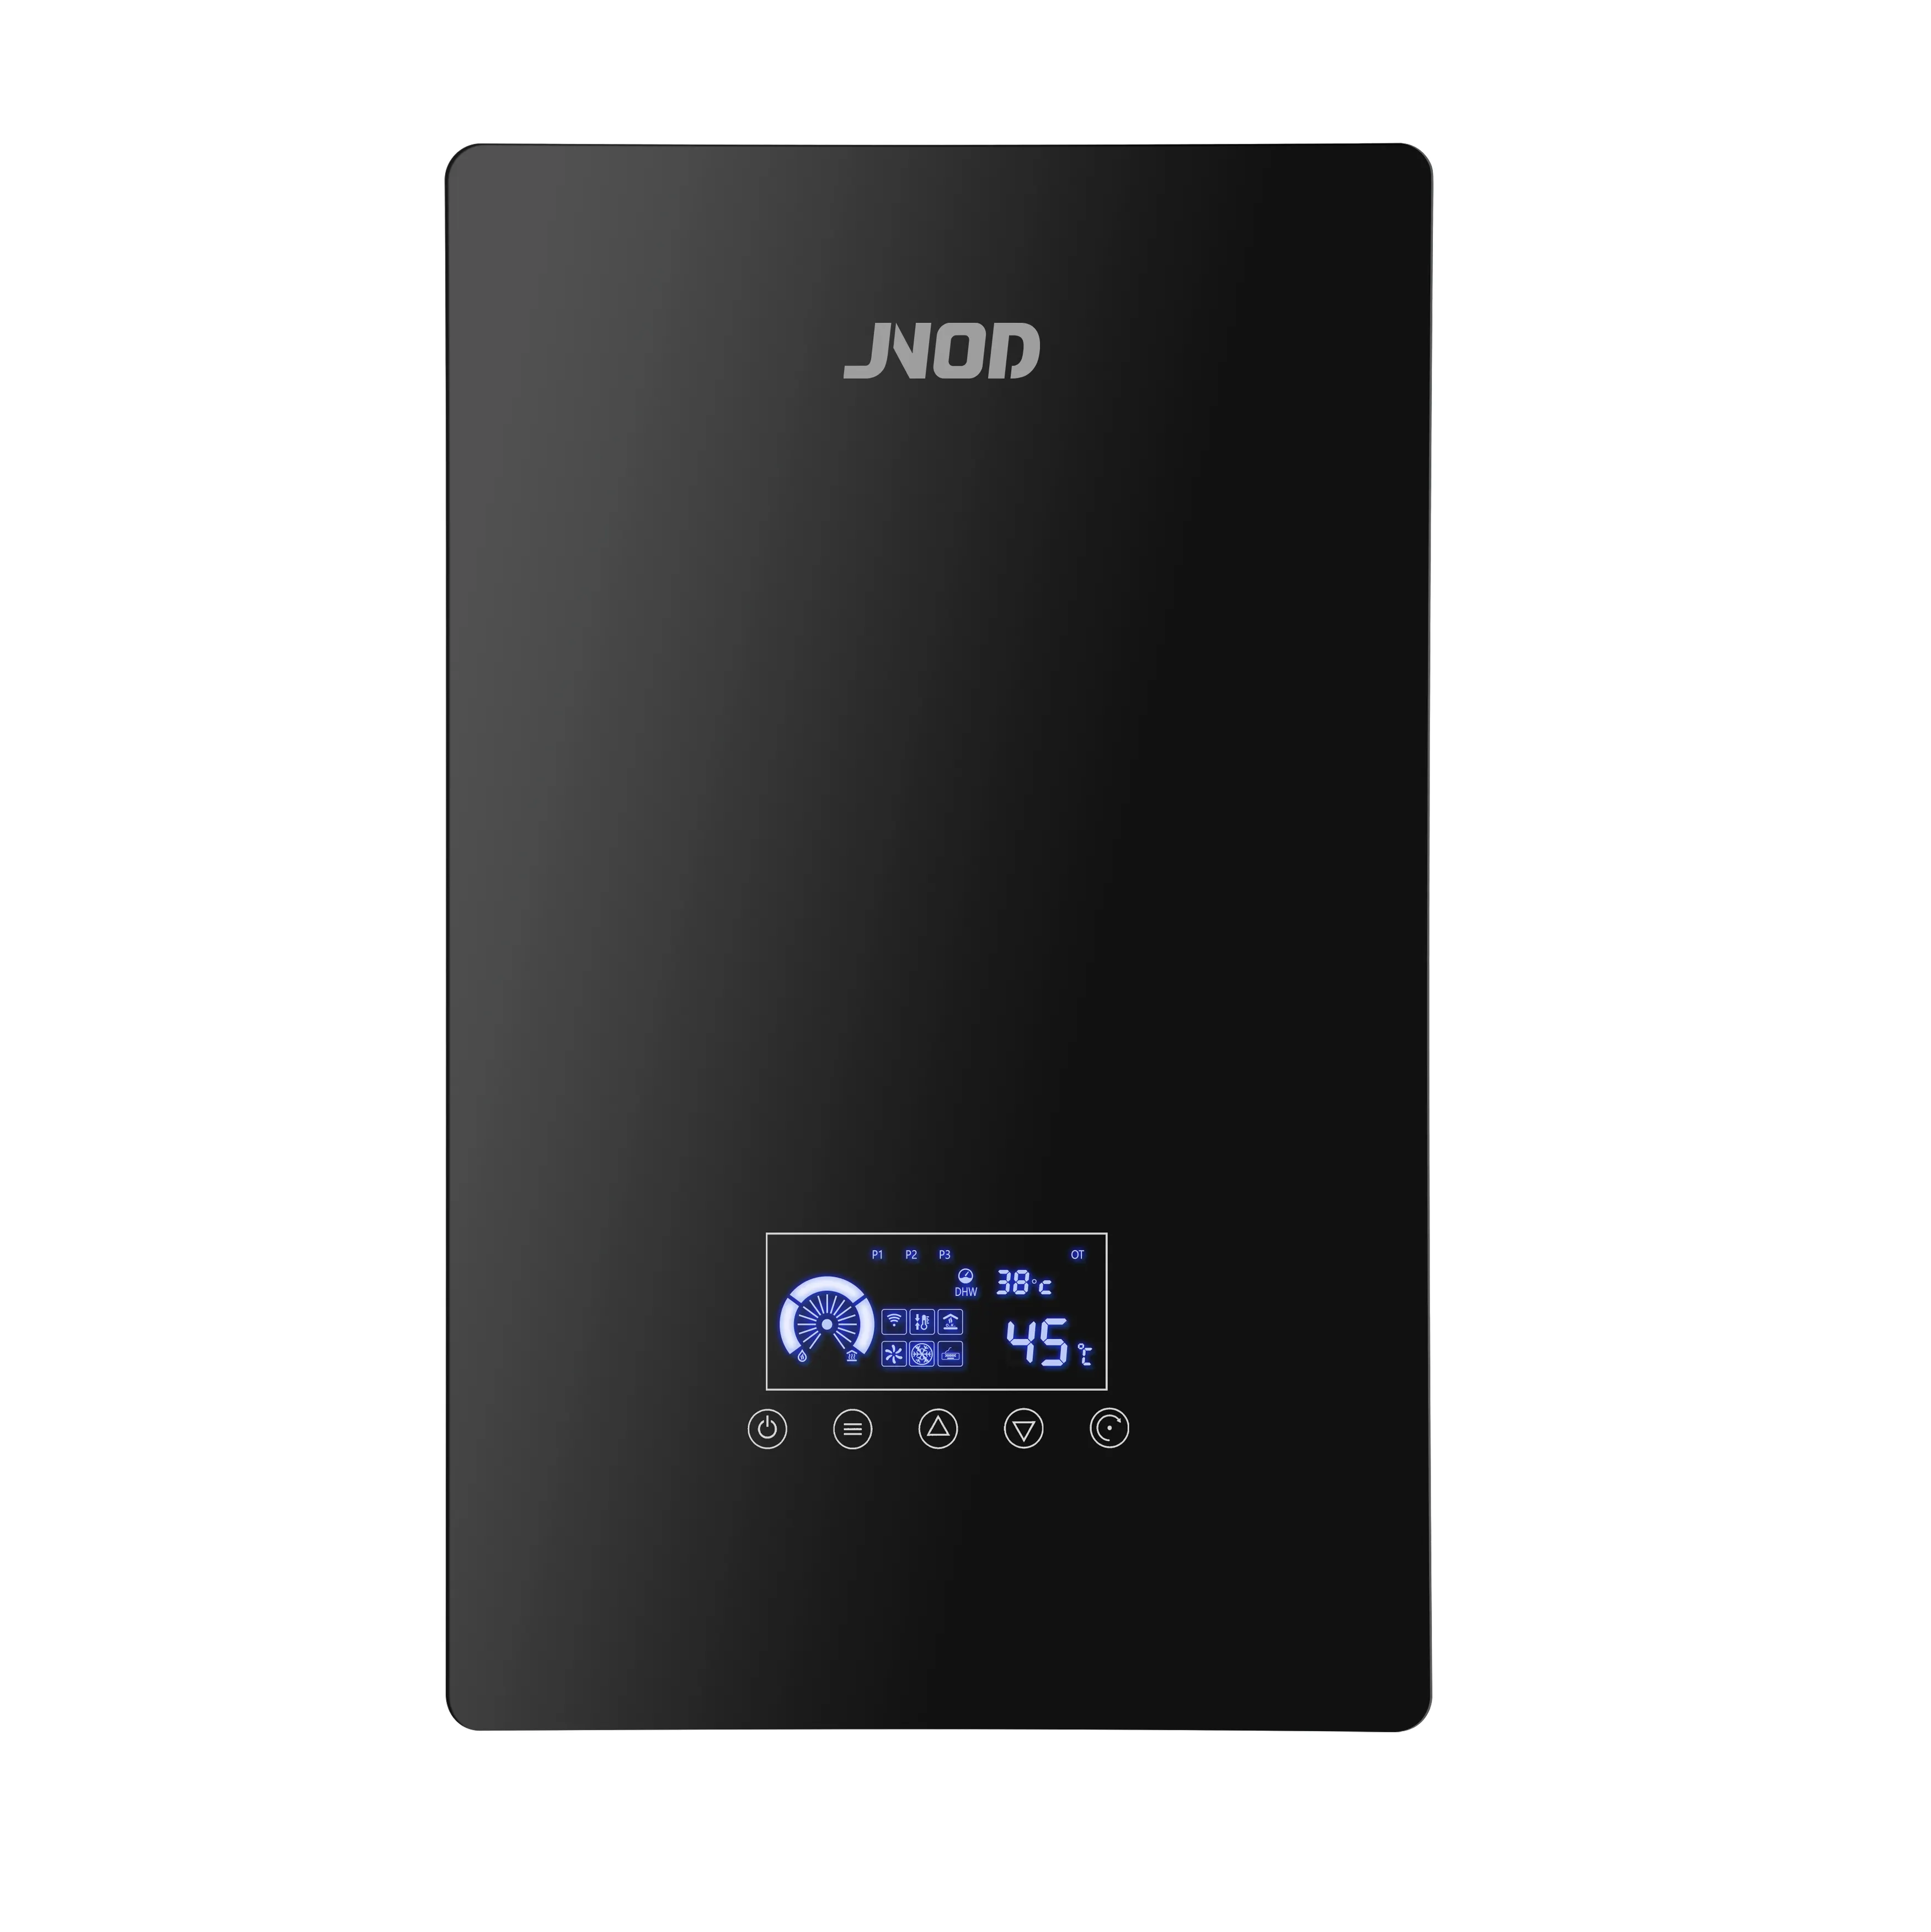 JNOD-سخان كهربائي مركزي, جهاز تسخين كهربائي من الزجاج المقسى للتدفئة تحت البلاط والاستحمام ، غلاية كومبي كهربائية